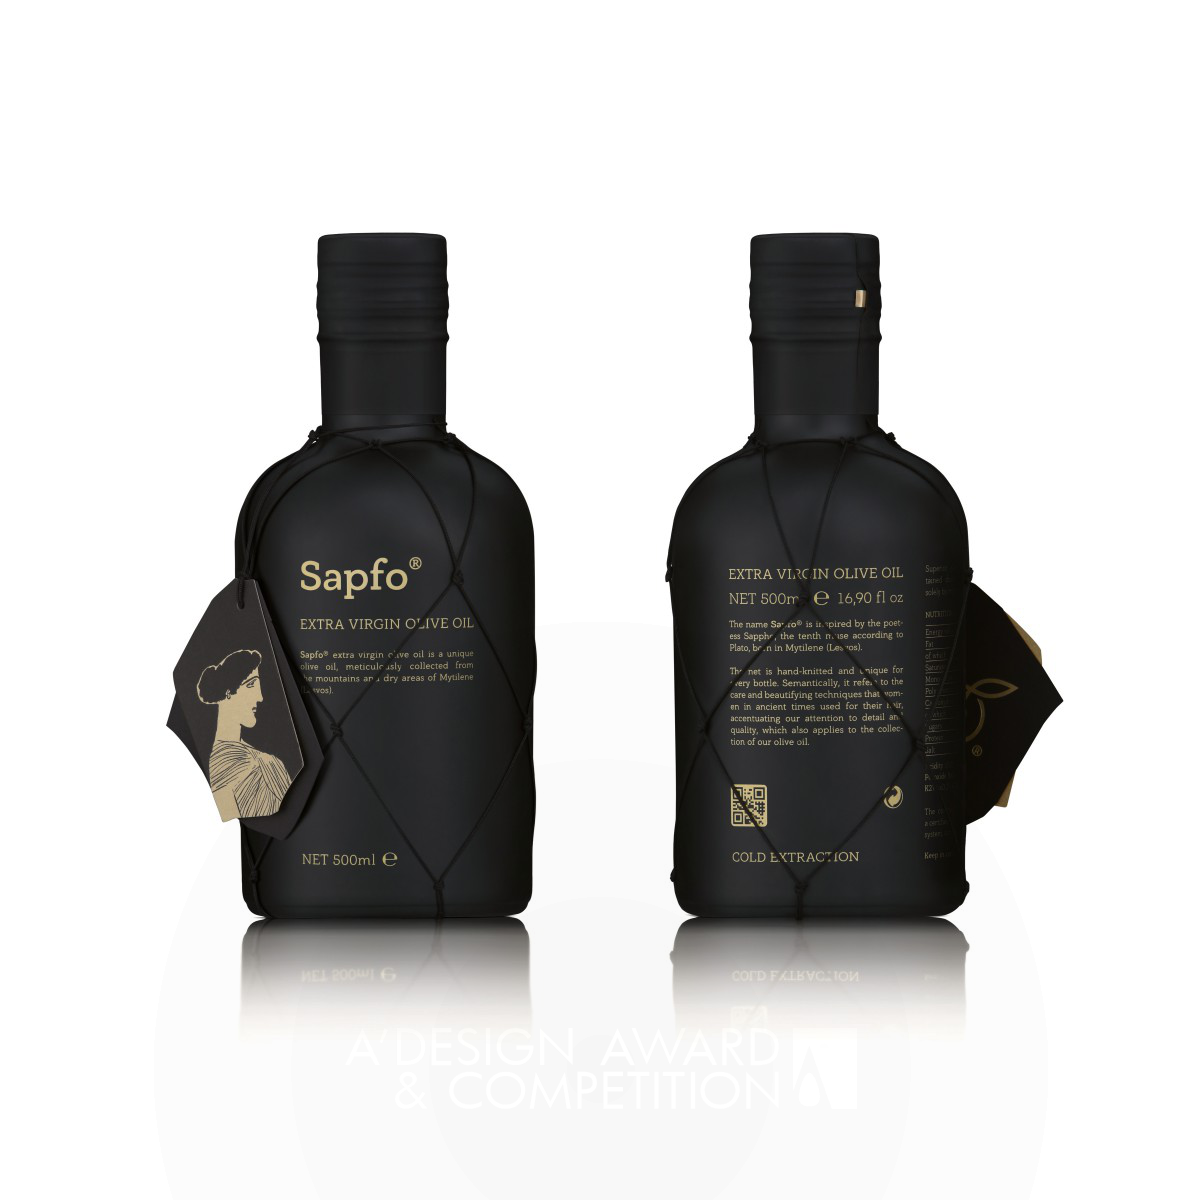 Sapfo <b>Extra Virgin Olive Oil